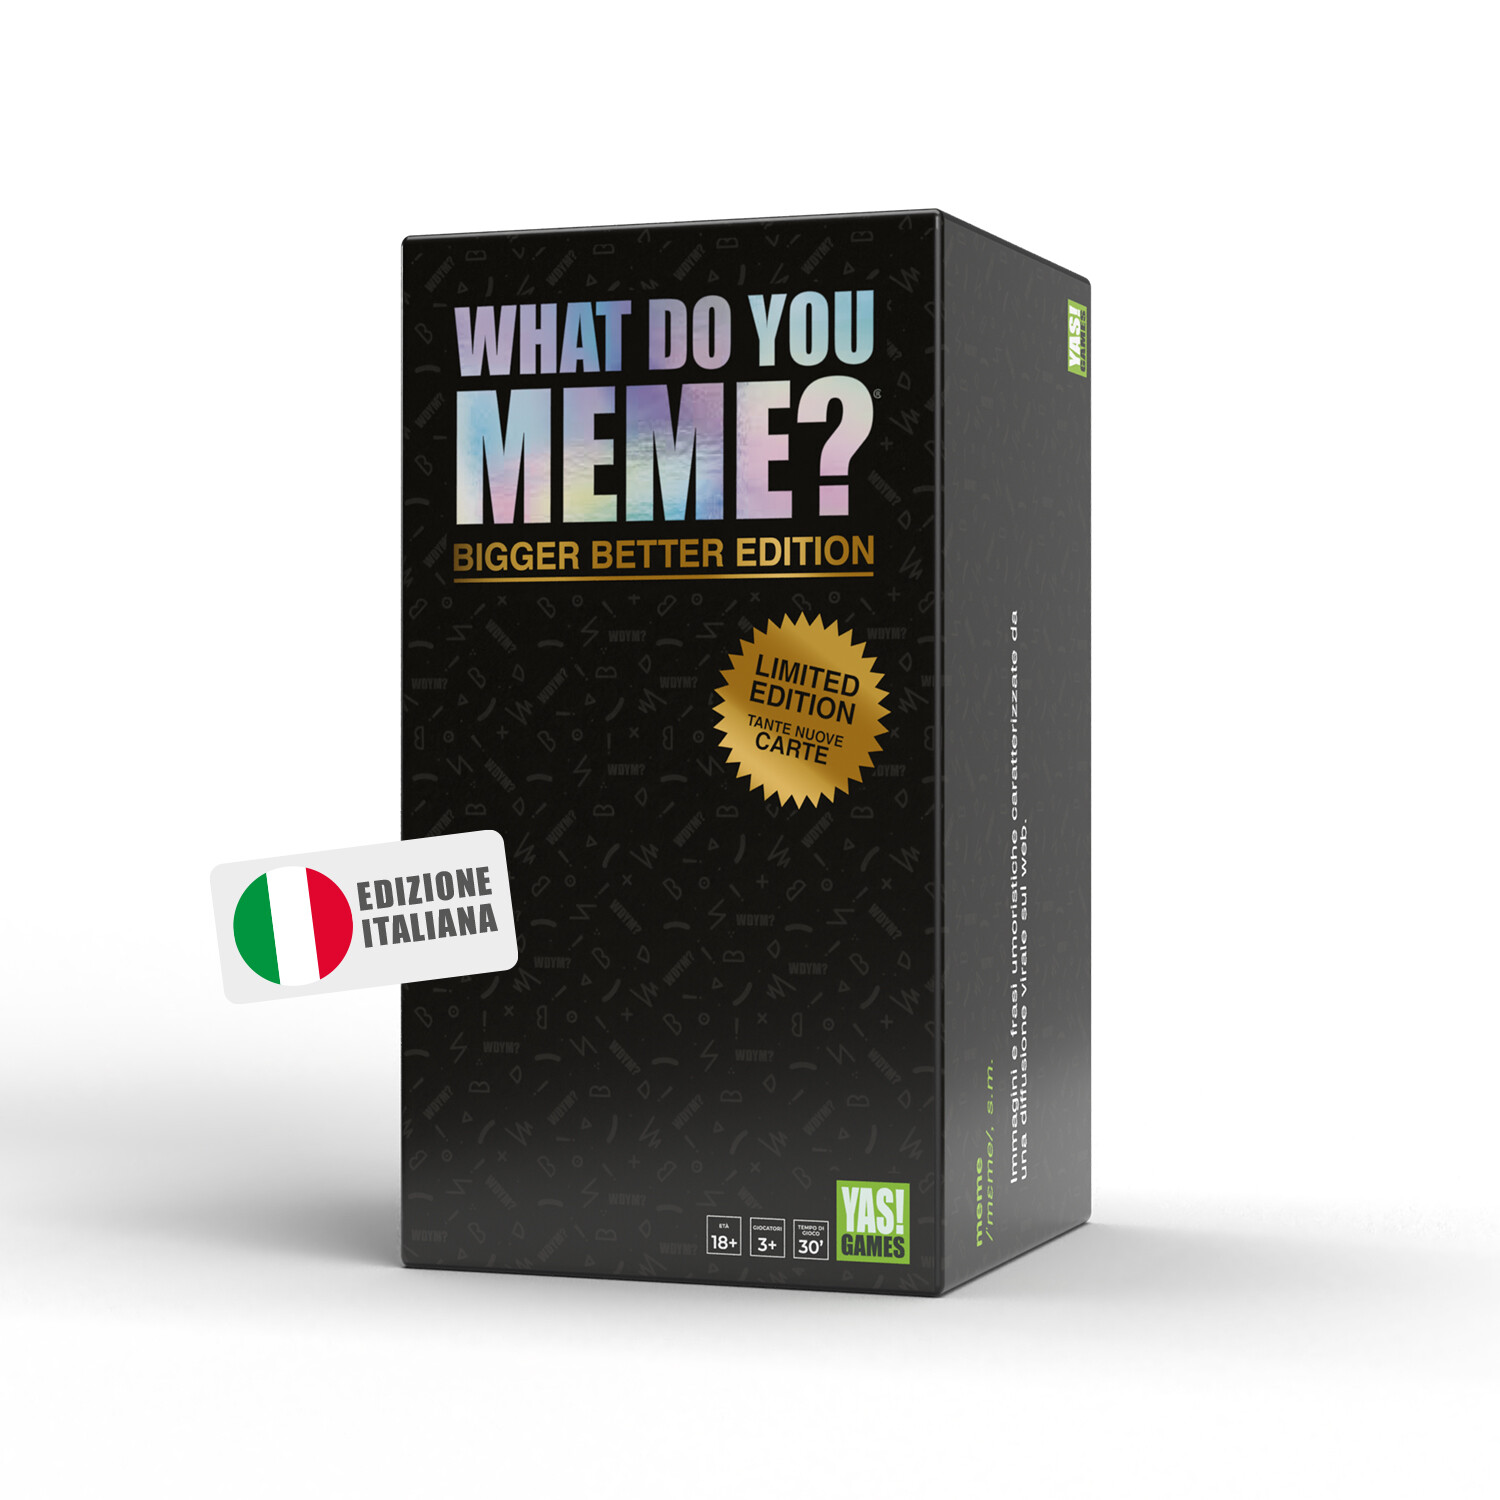 Yas!games - what do you meme? bigger better edition -  piu' meme piu' risate - 